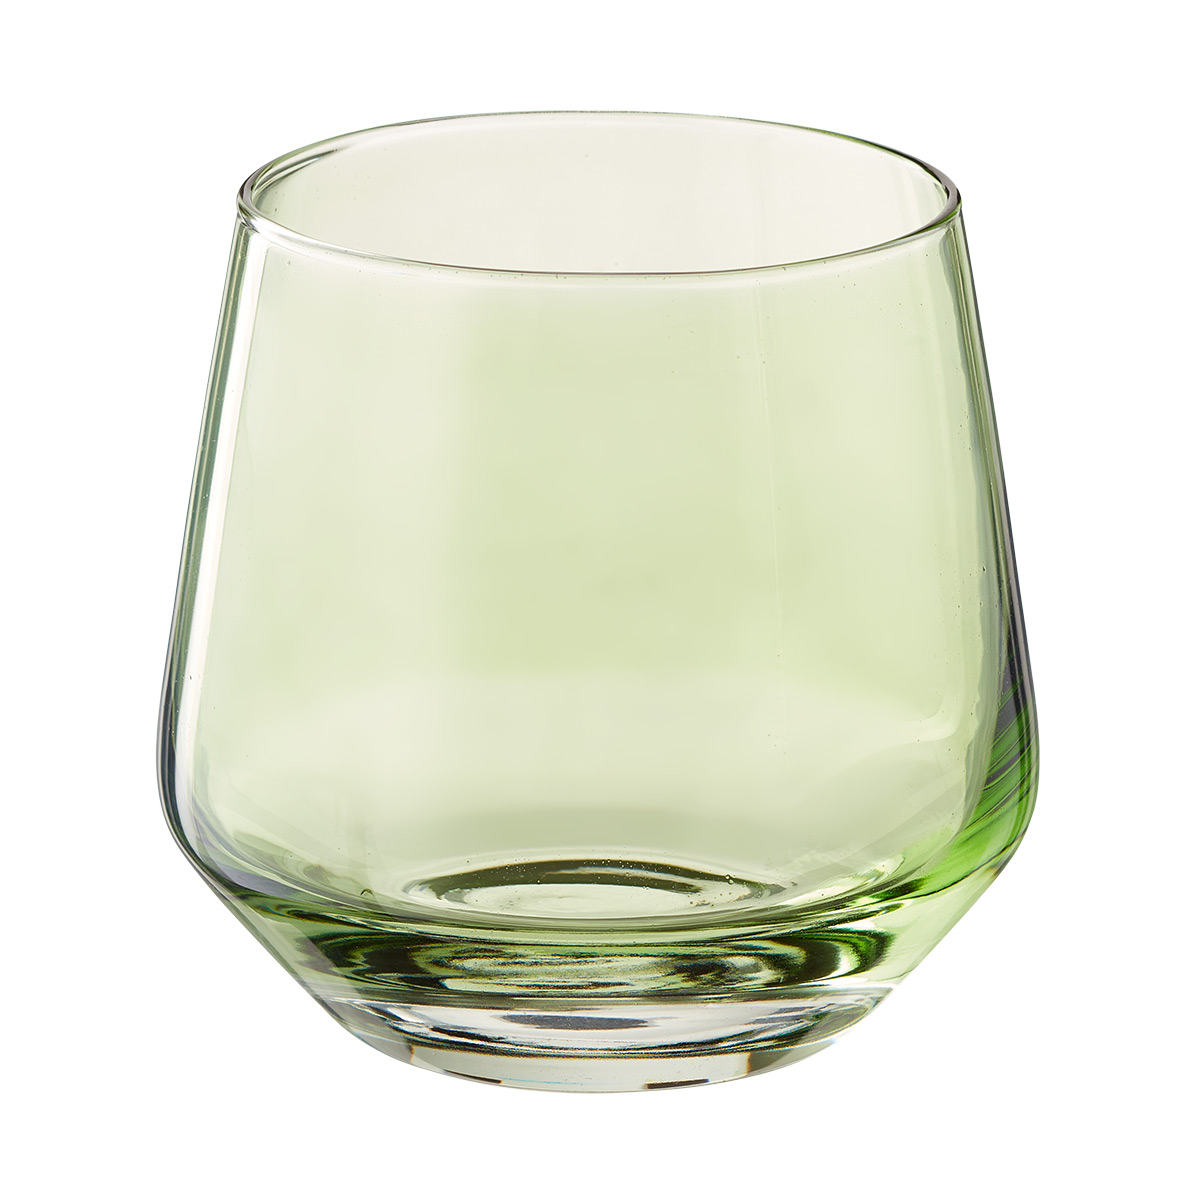 Glass Hause Co. 13.5 oz. Stemless Wine Glass Citron